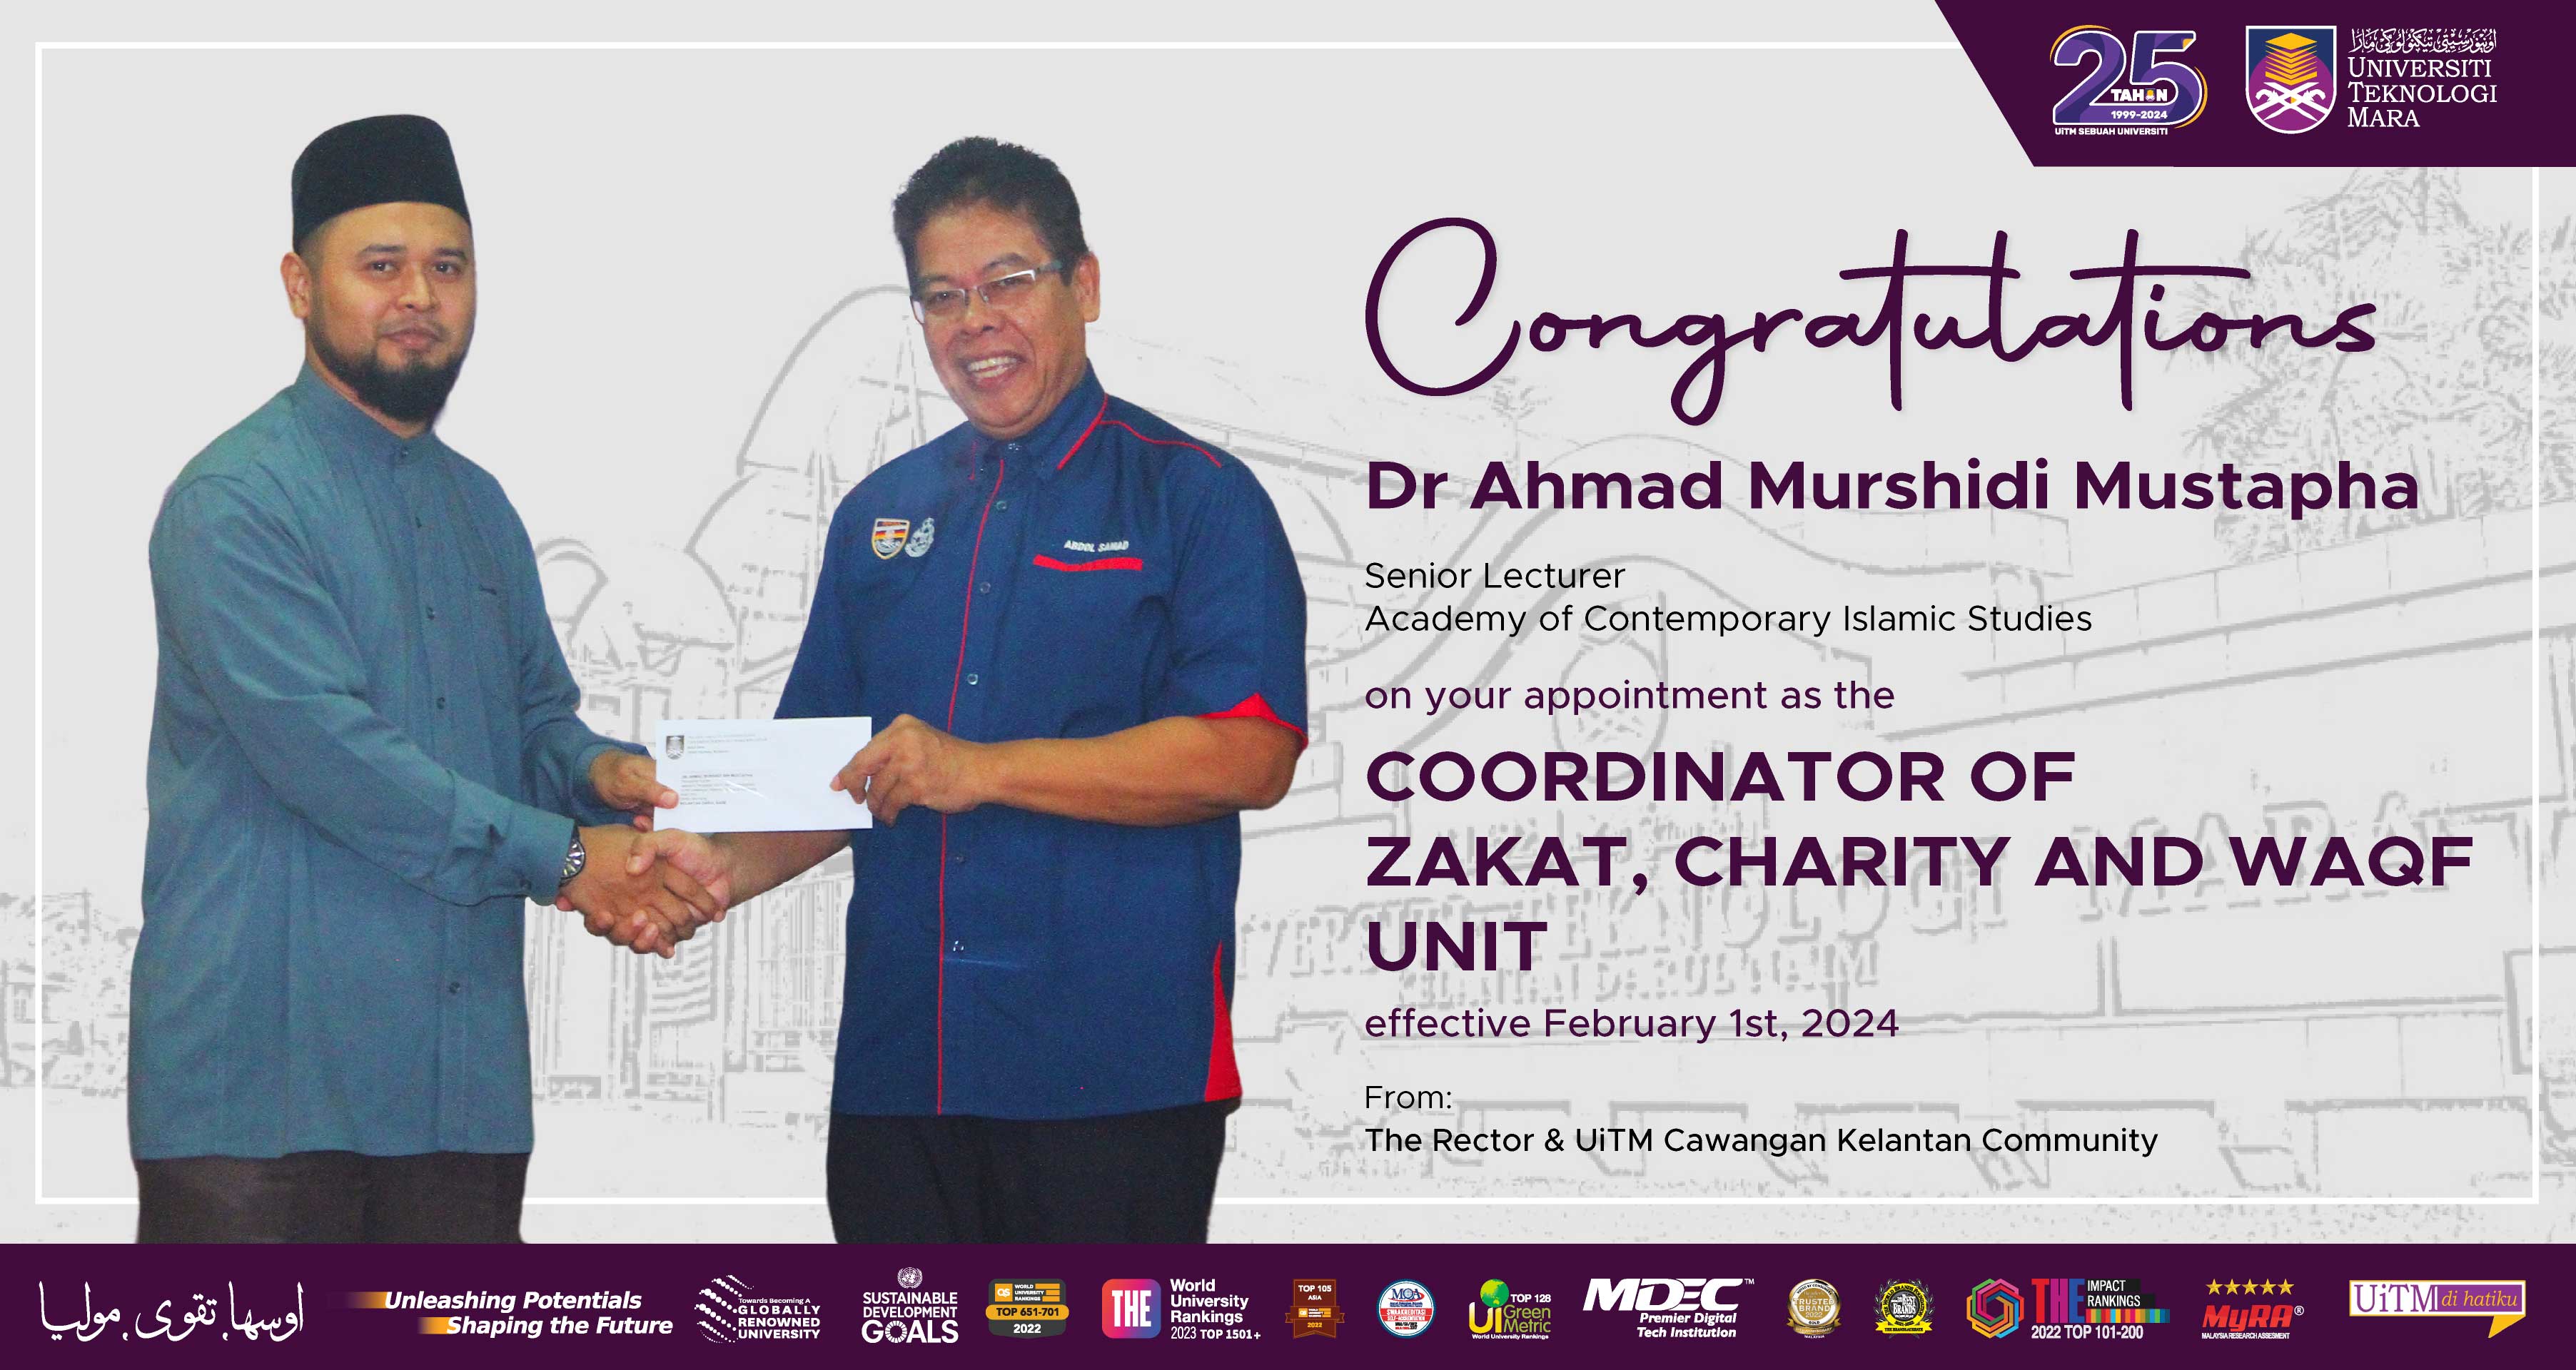 Congratulations!!! Dr Ahmad Murshidi Mustapha, Coordinator of Zakat, Charity and Waqf Unit